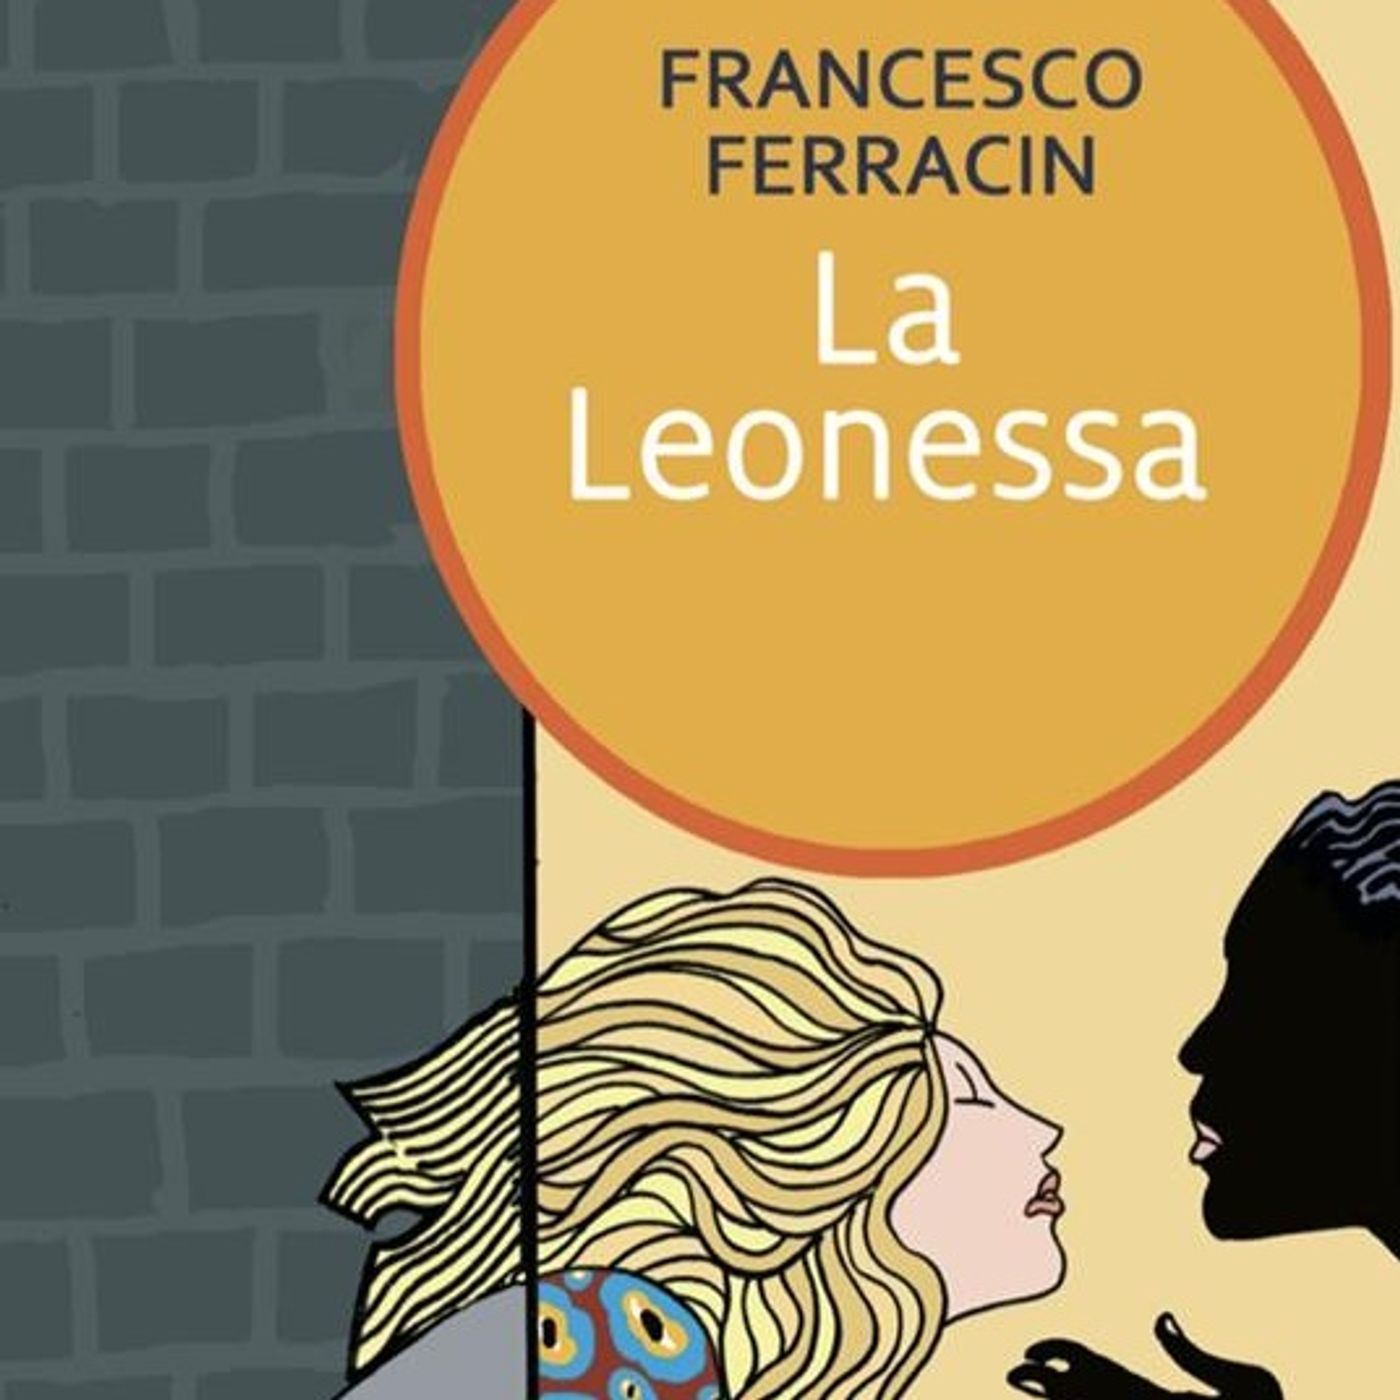 Francesco Ferracin "La leonessa"